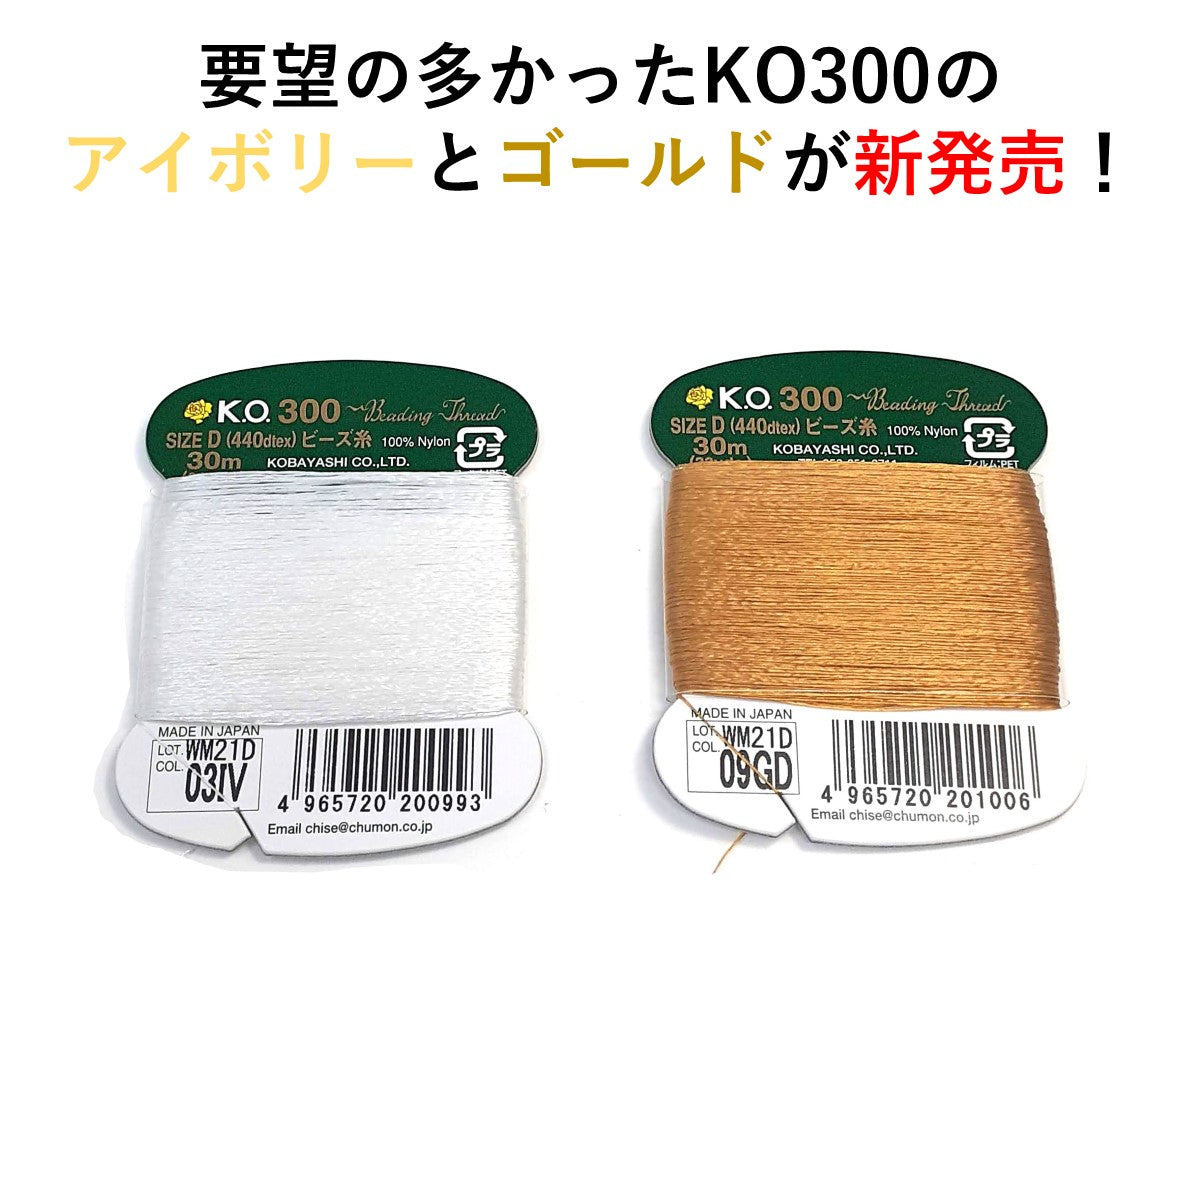 KO300 30m CARD 新色03IVと09GDが発売しました！